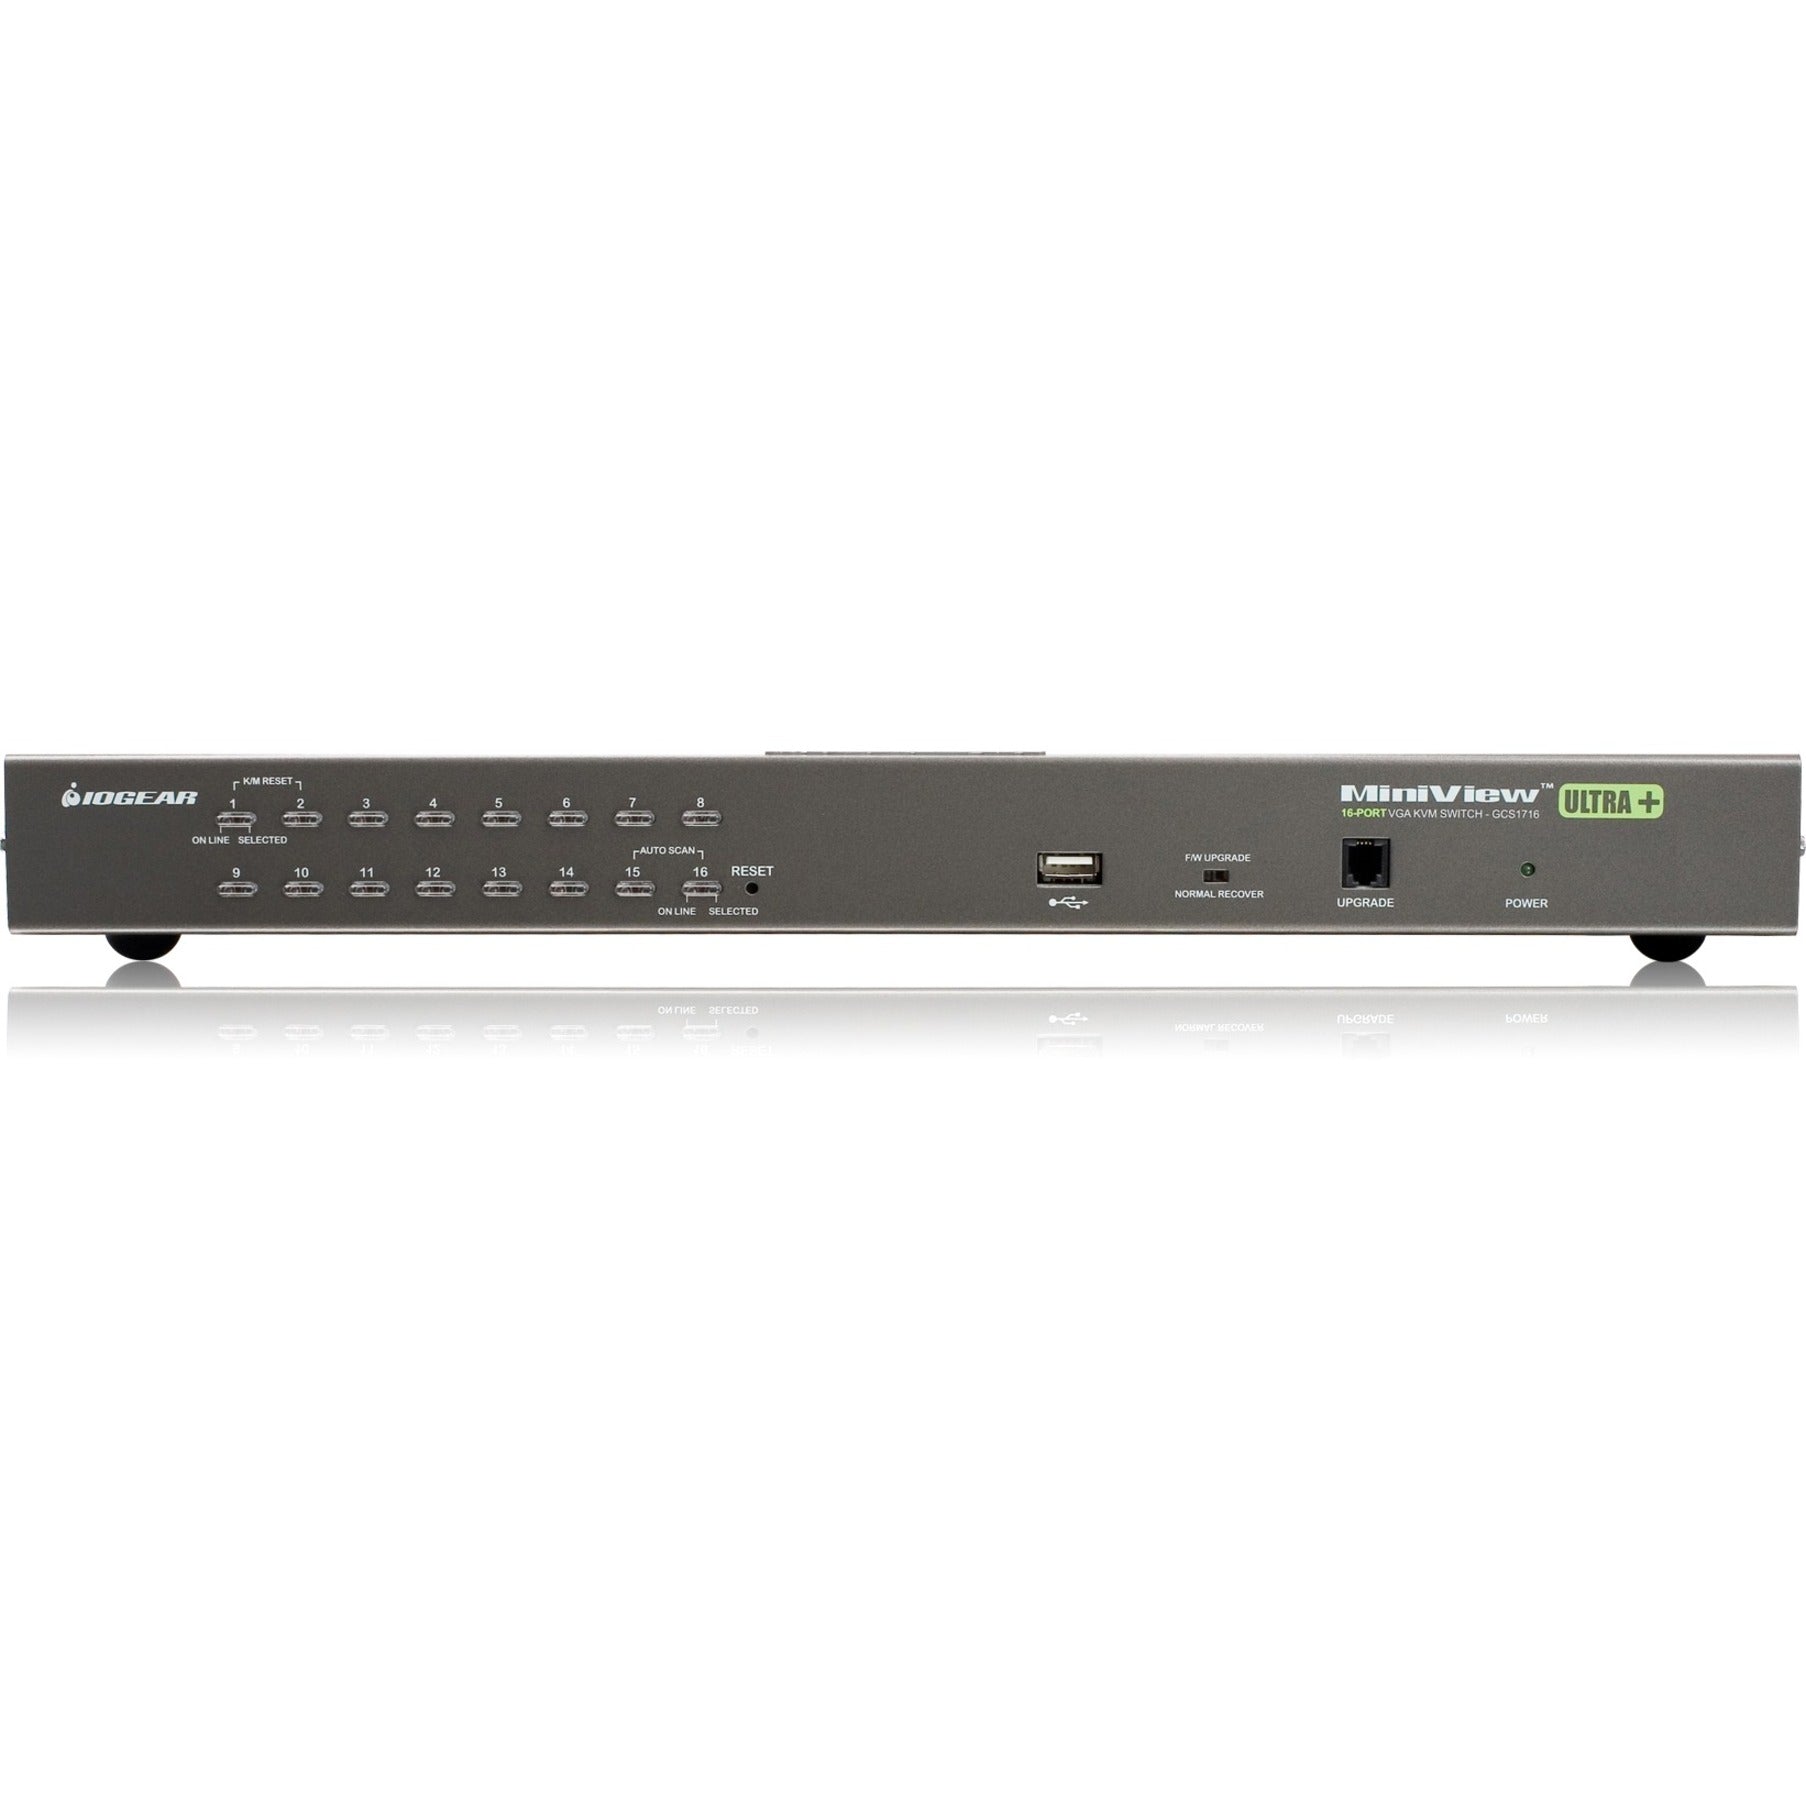 IOGEAR GCS1716 16-Port USB PS/2 Combo KVM Switch, QXGA, 2048 x 1536, 3 Year Warranty, Energy Star, TAA Compliant, Rack-mountable